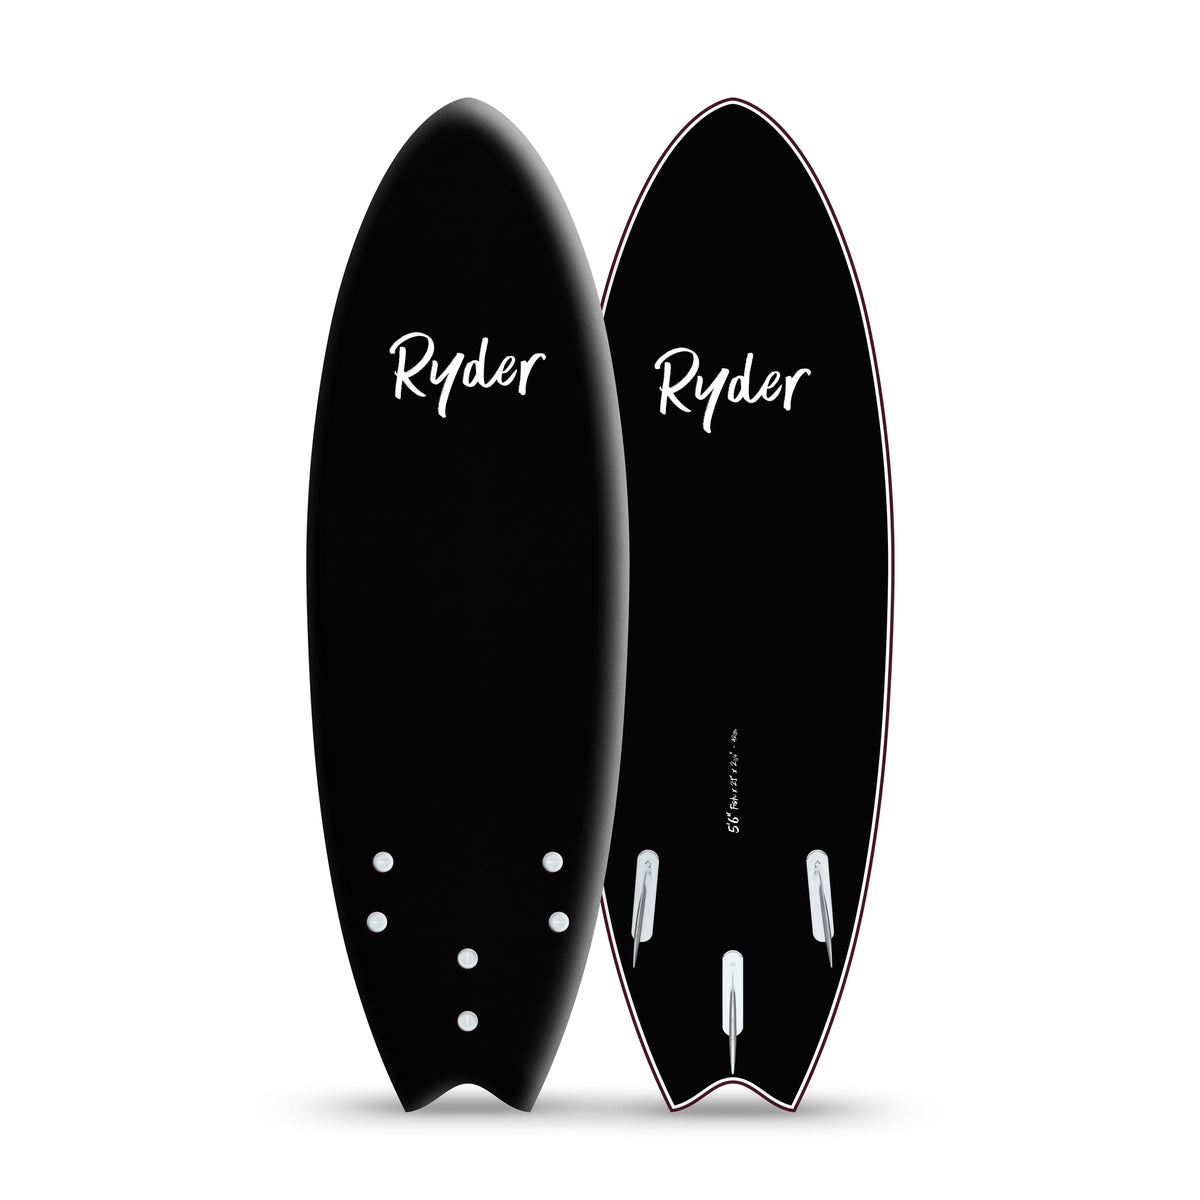 Ryder Fish 5 6 Soft Surfboard